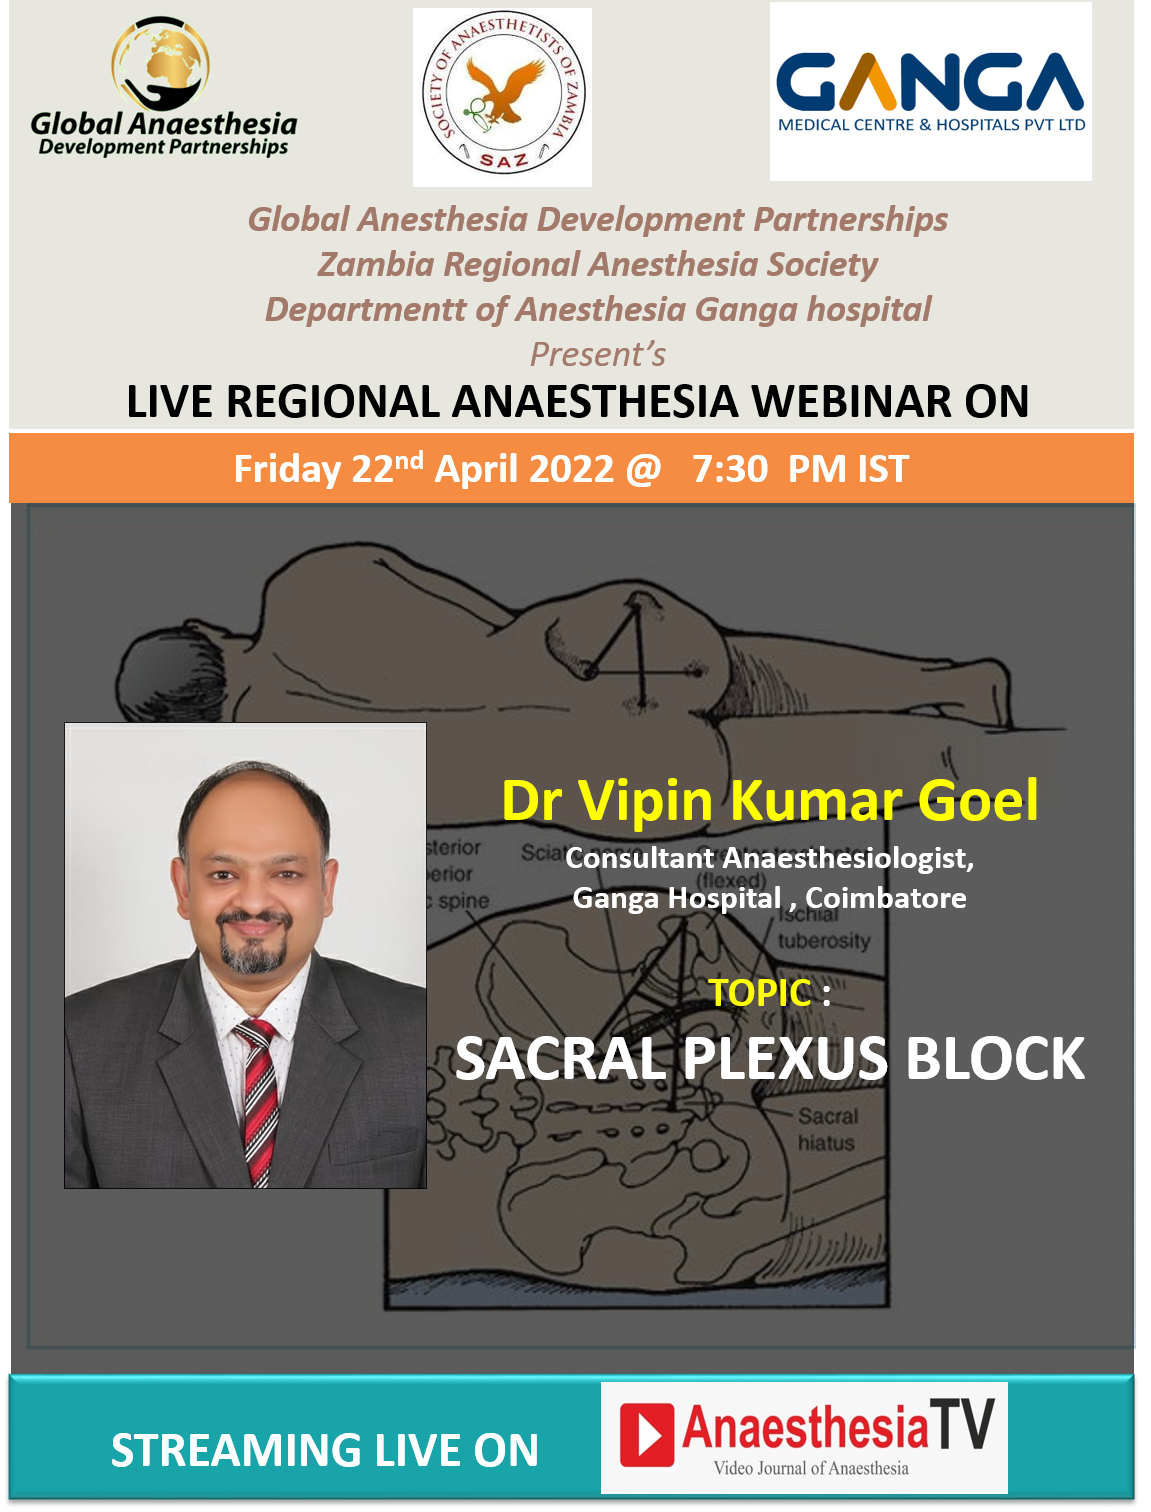 SACRAL PLEXUS BLOCK by Dr. Vipin Kumar Goel (Consultant Anesthesiologist, Ganga hospital, India)